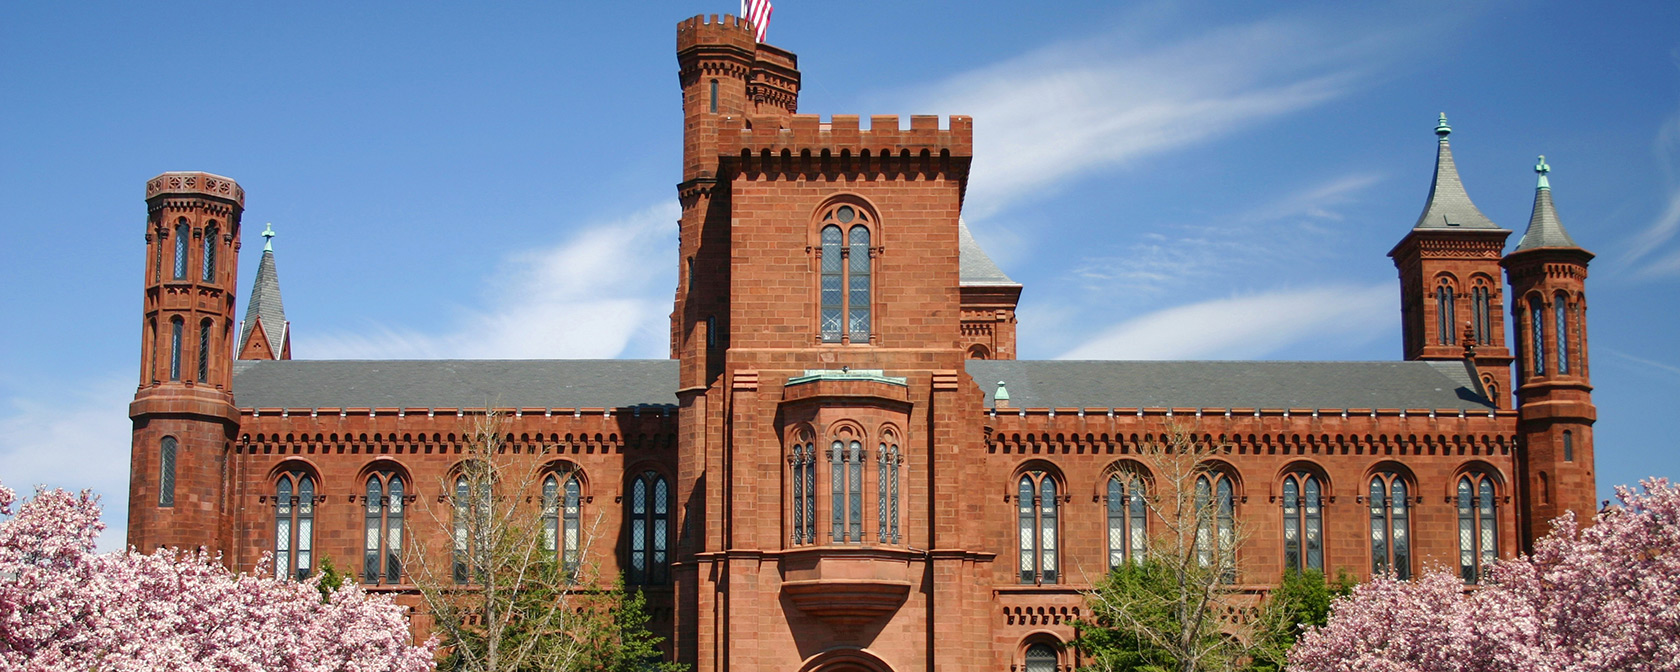 Smithsonian-Schloss